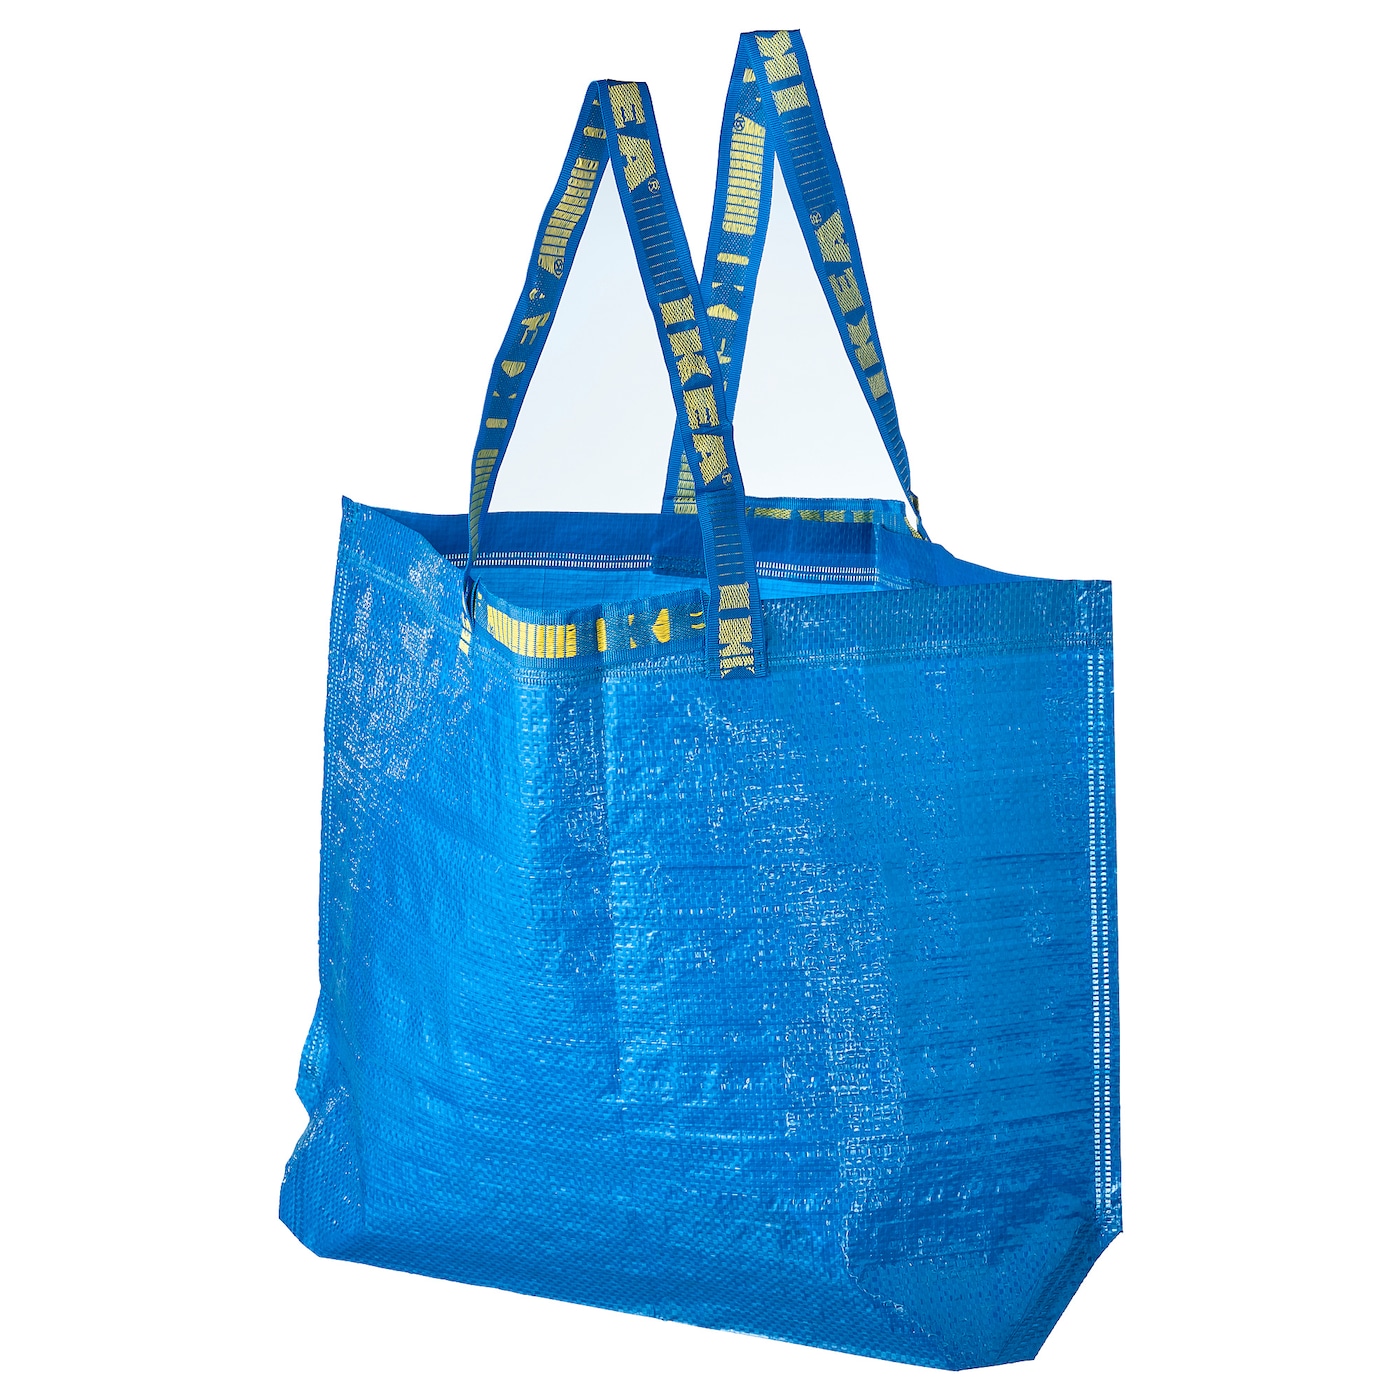 frakta-carrier-bag-medium-blue__0711240_pe728085_s5.jpg